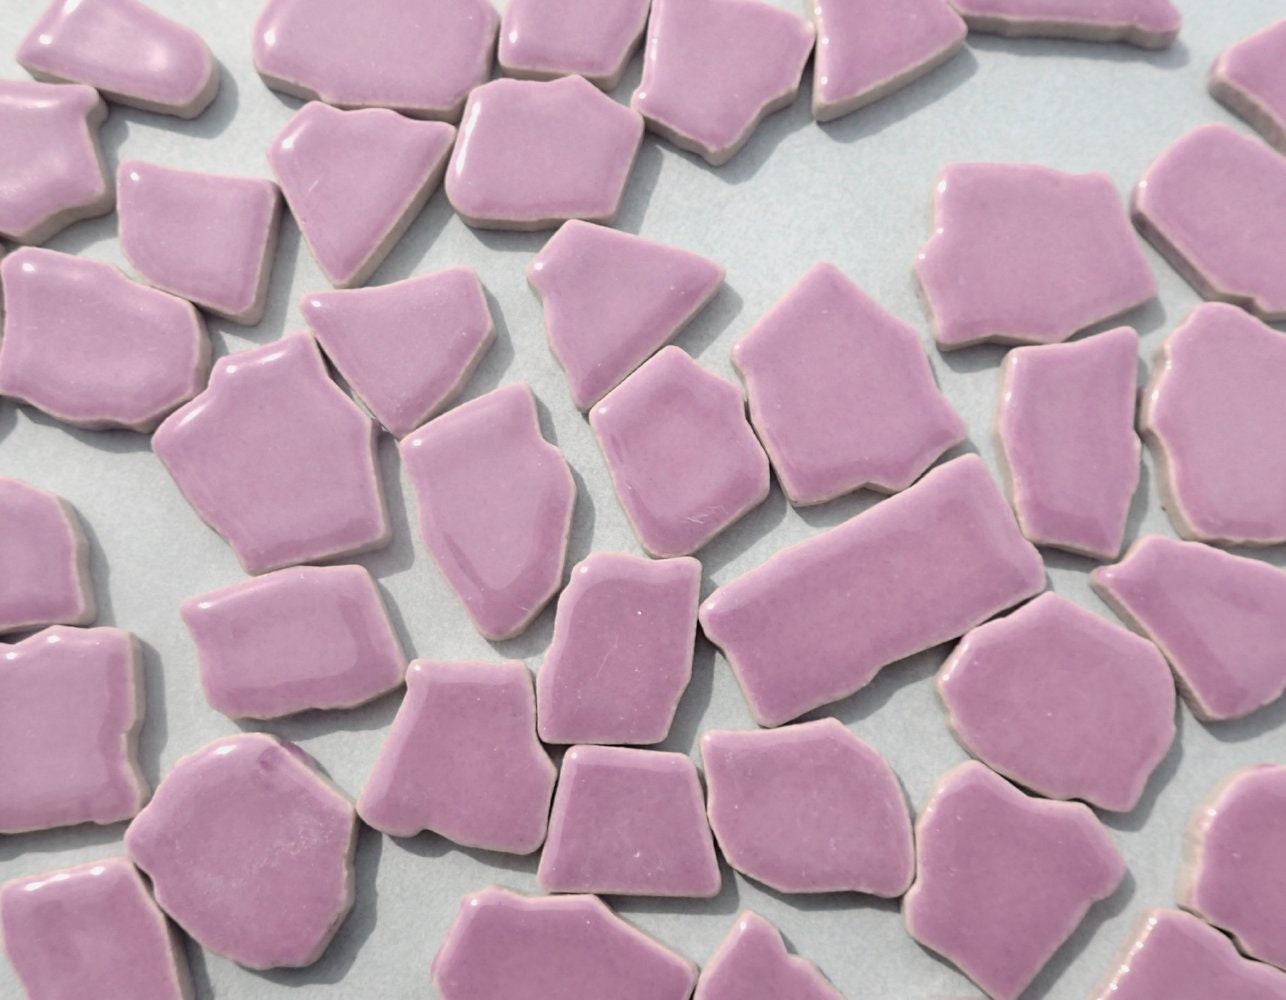 Purple Mosaic Ceramic Tiles - Random Shapes - Half Pound - Assorted Sizes Jigsaw Pieces